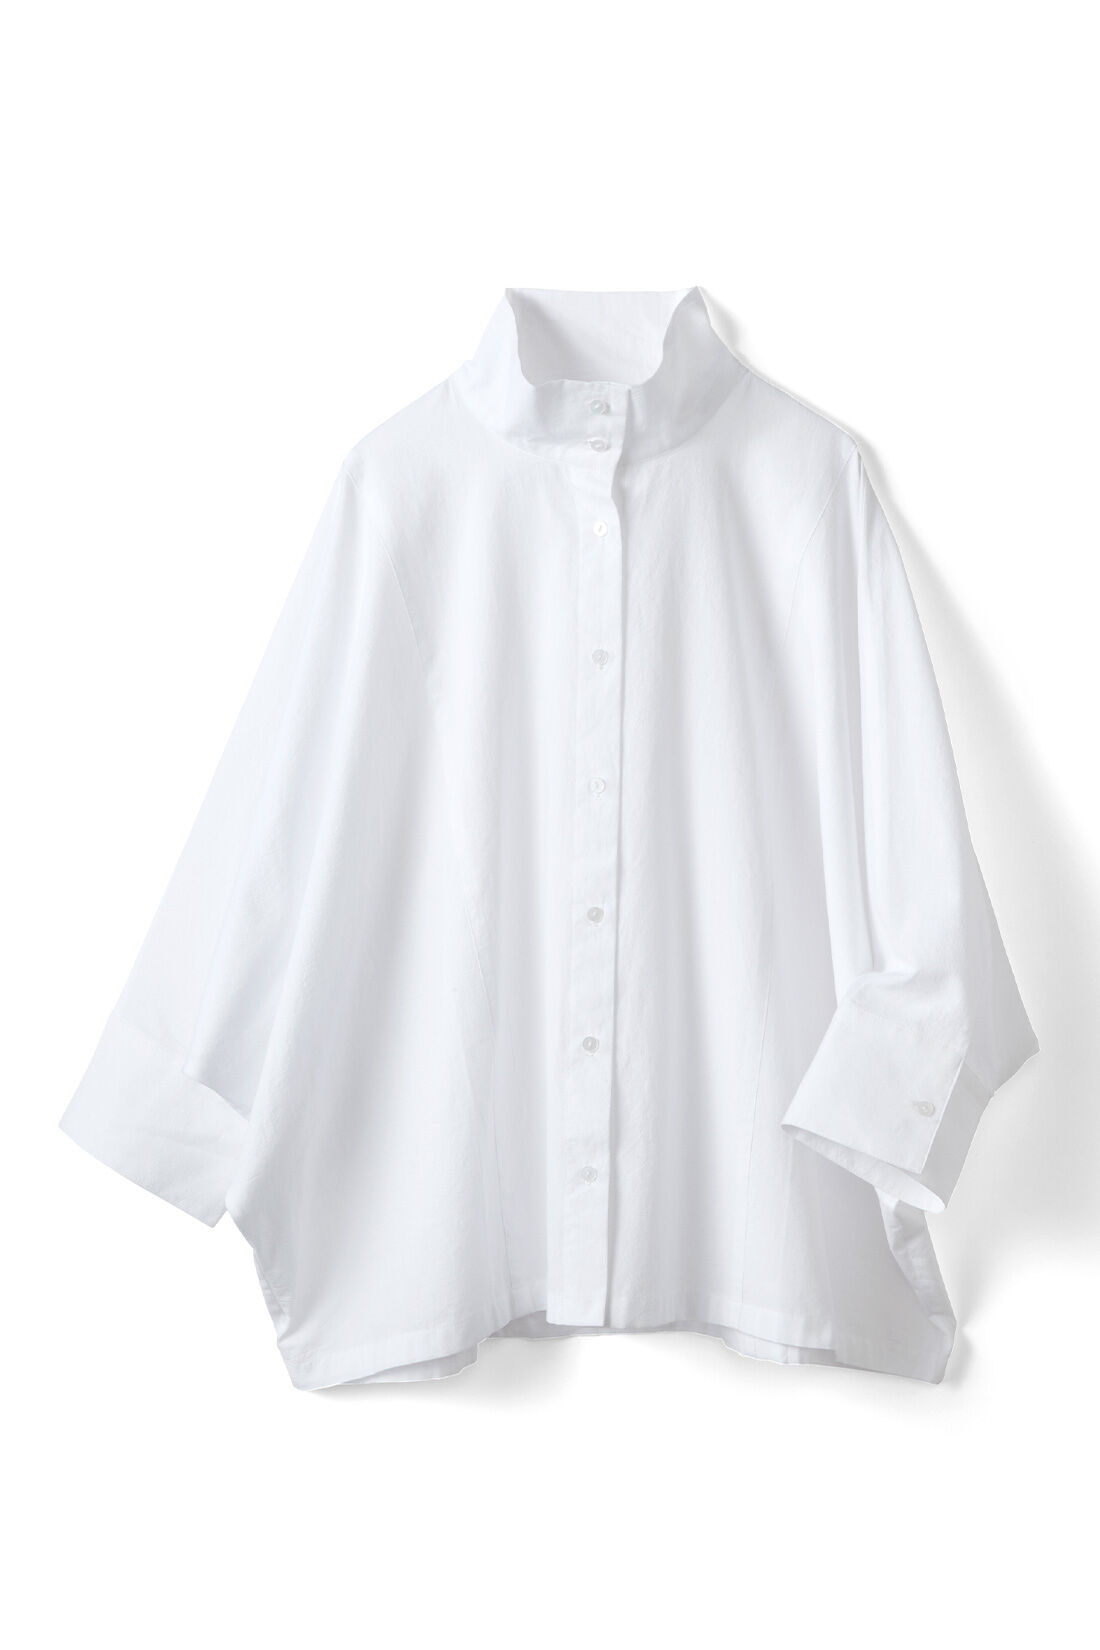 IEDIT|IEDIT[イディット]　コットン素材のスタンドカラー ドルマンスリーブシャツ〈オフホワイト〉|〈オフホワイト〉